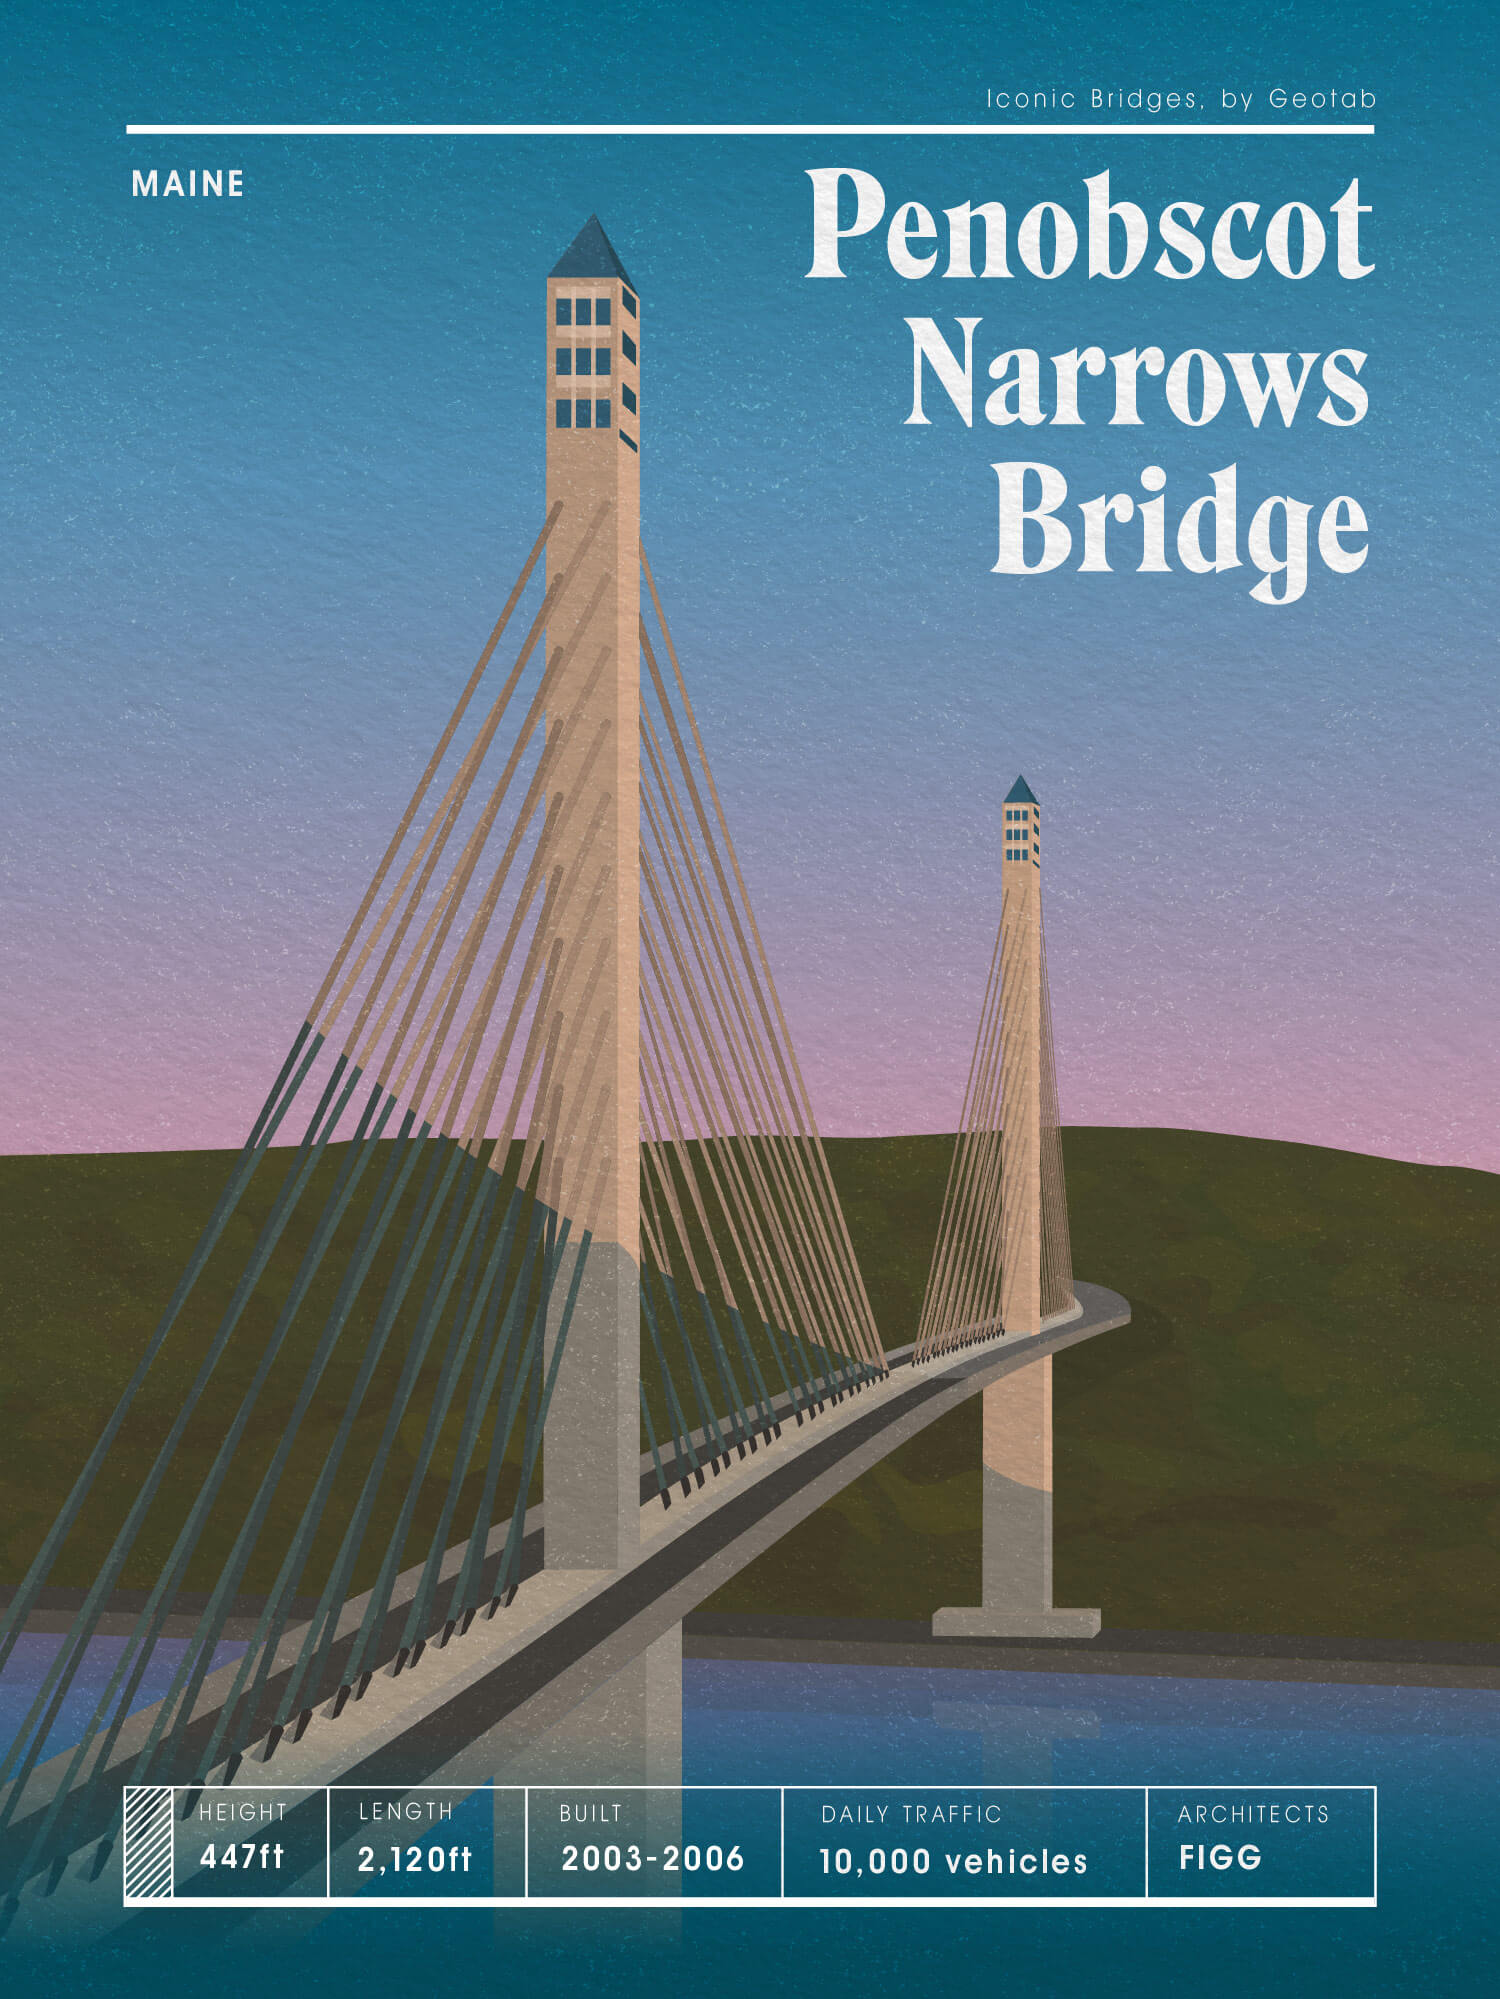 Illustration of Penobscot Narrows Bridge